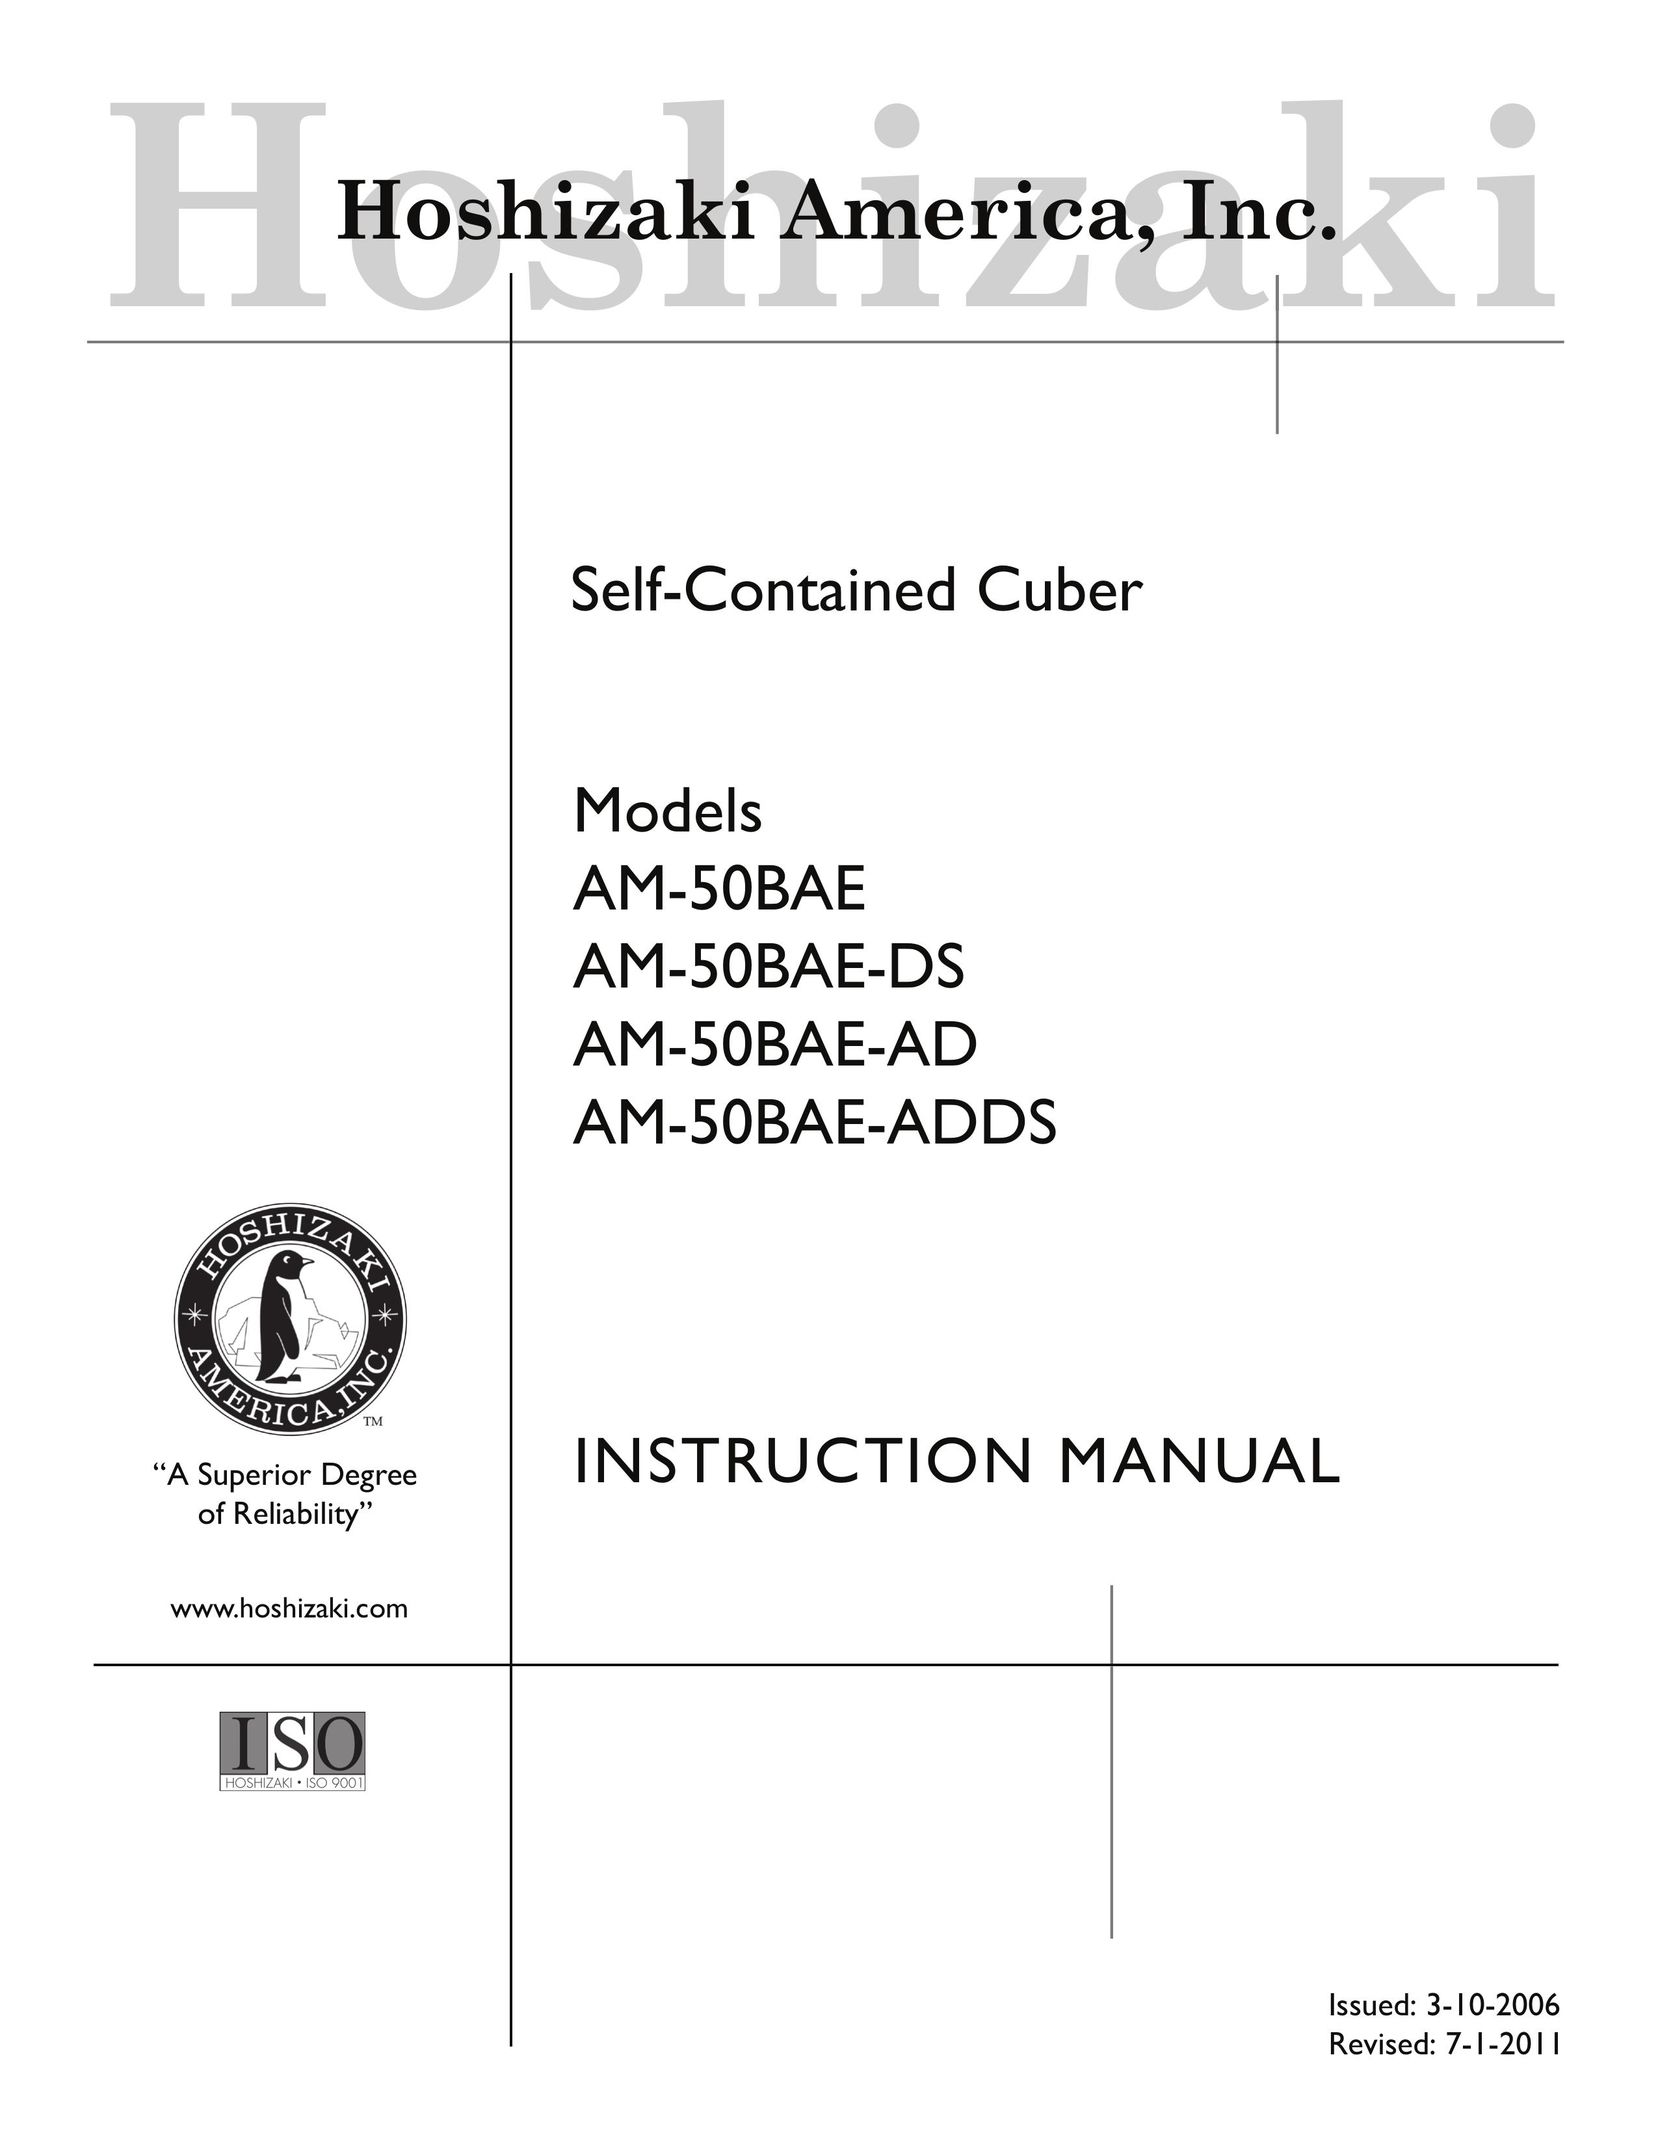 Hoshizaki AM-50BAE-AD Ice Maker User Manual